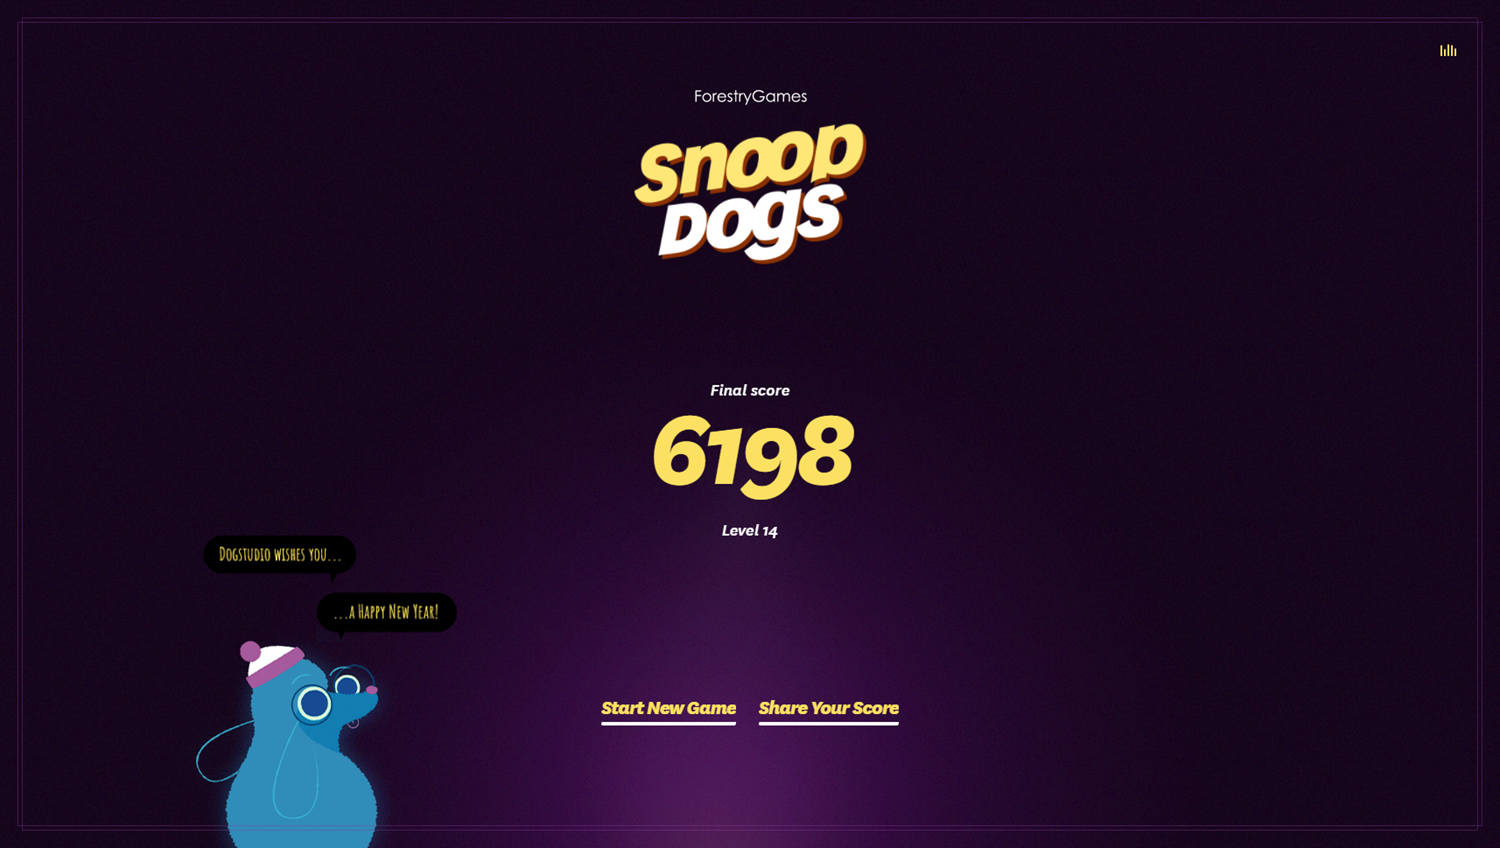 Snoop Dogs Game Score Screenshot.